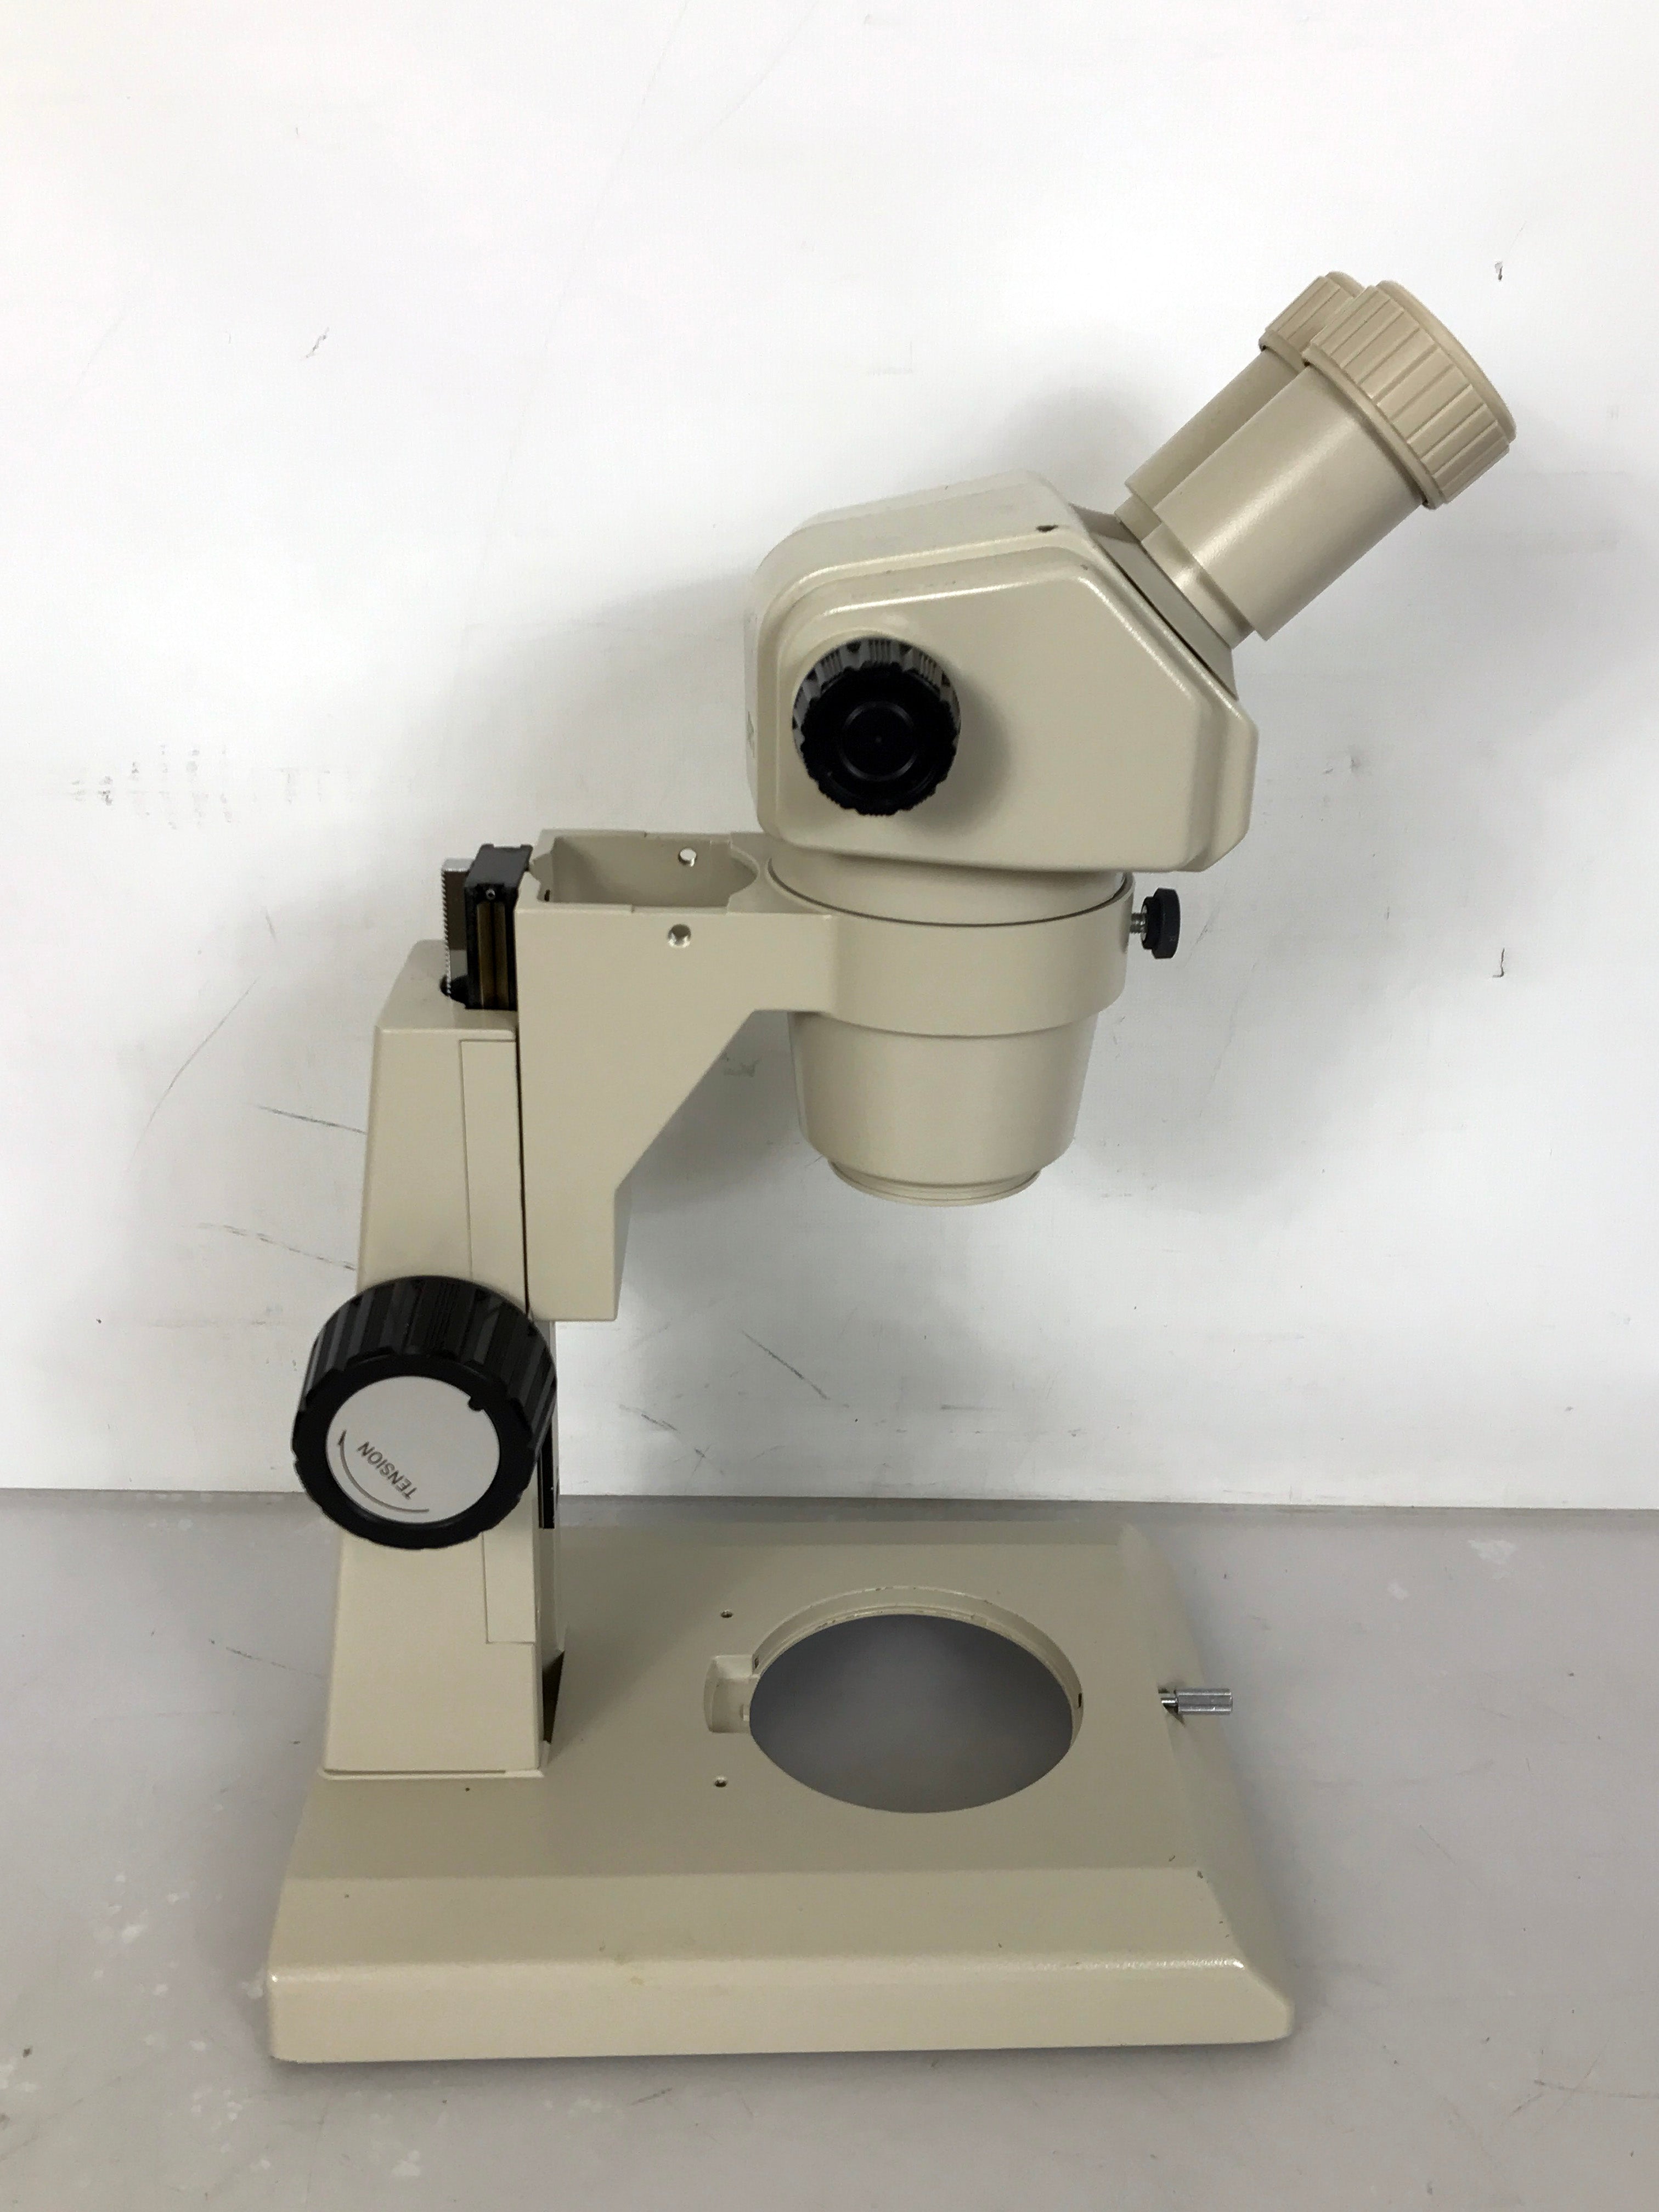 Nikon SMZ-1B Stereoscopic Microscope with Stand